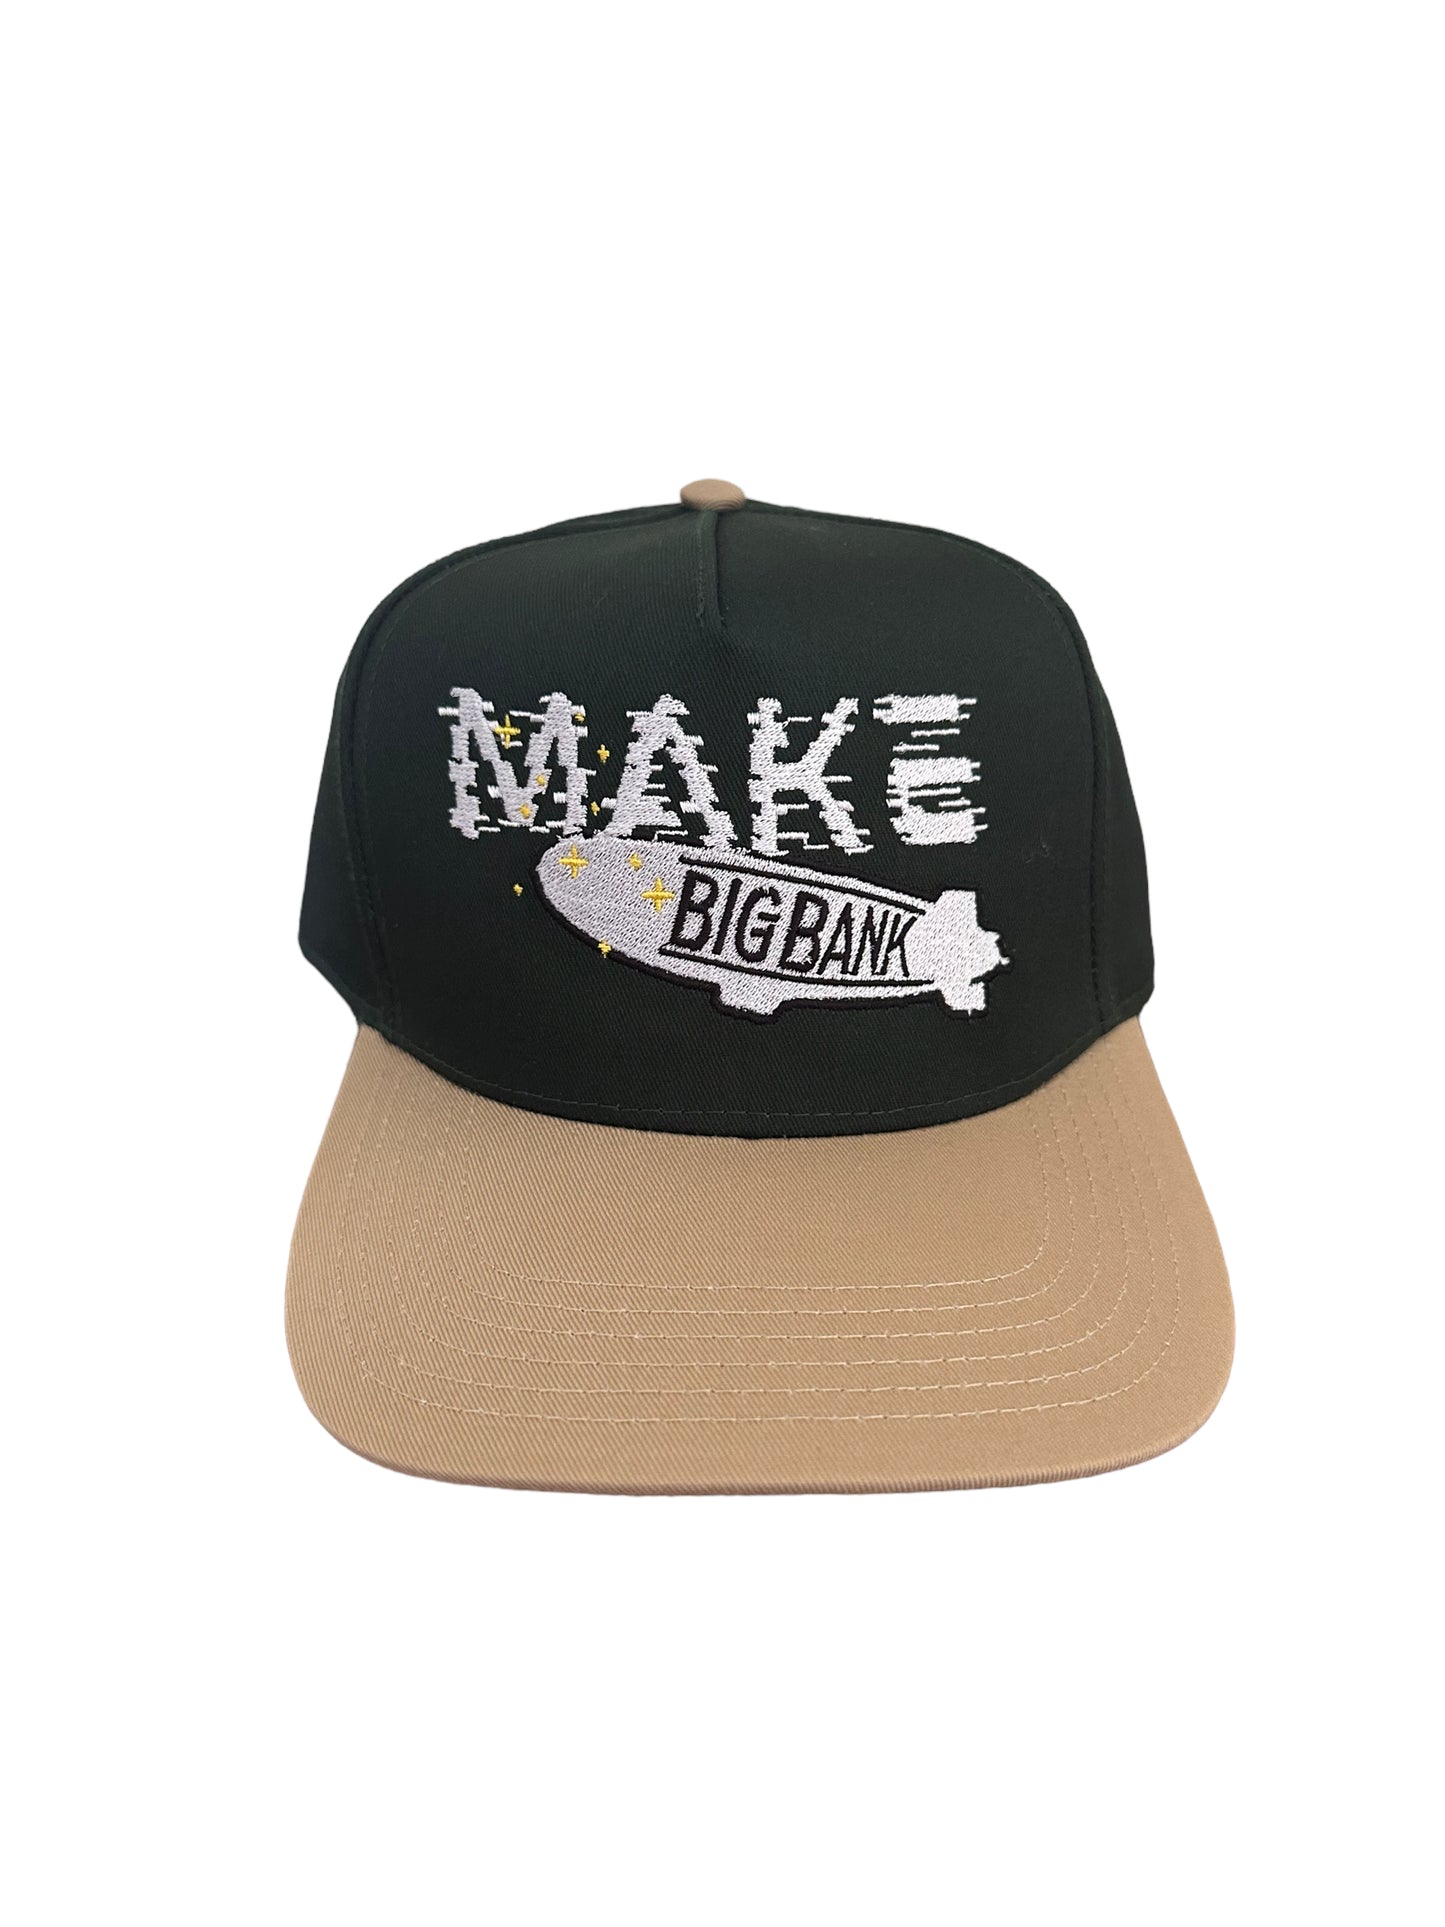 Blimp SnapBack Hat